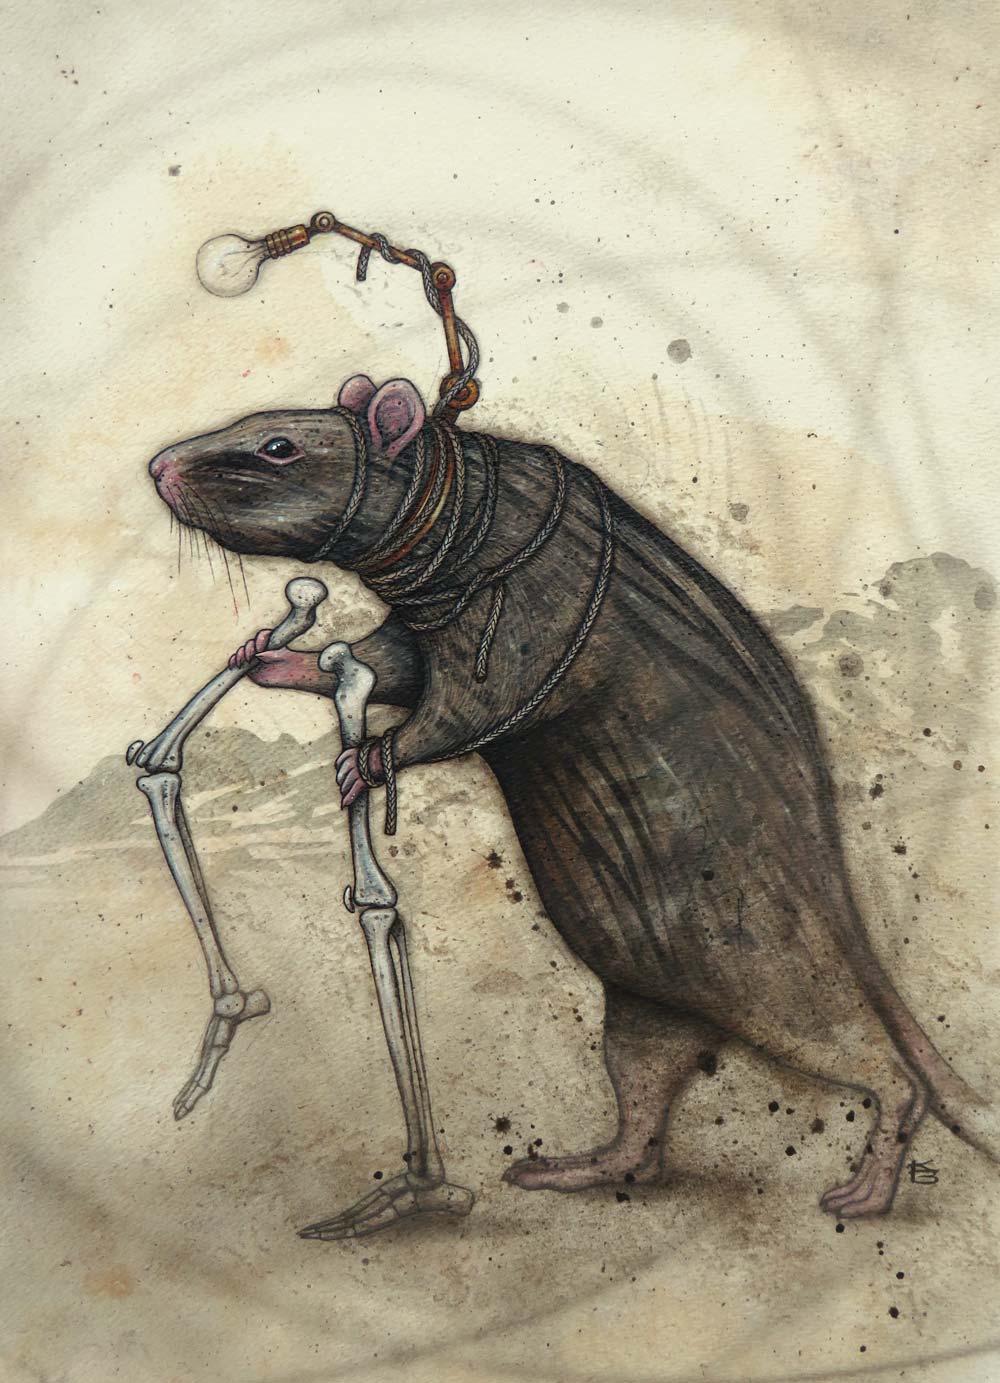 A rat with bone walking sticks and a broken lightbulb